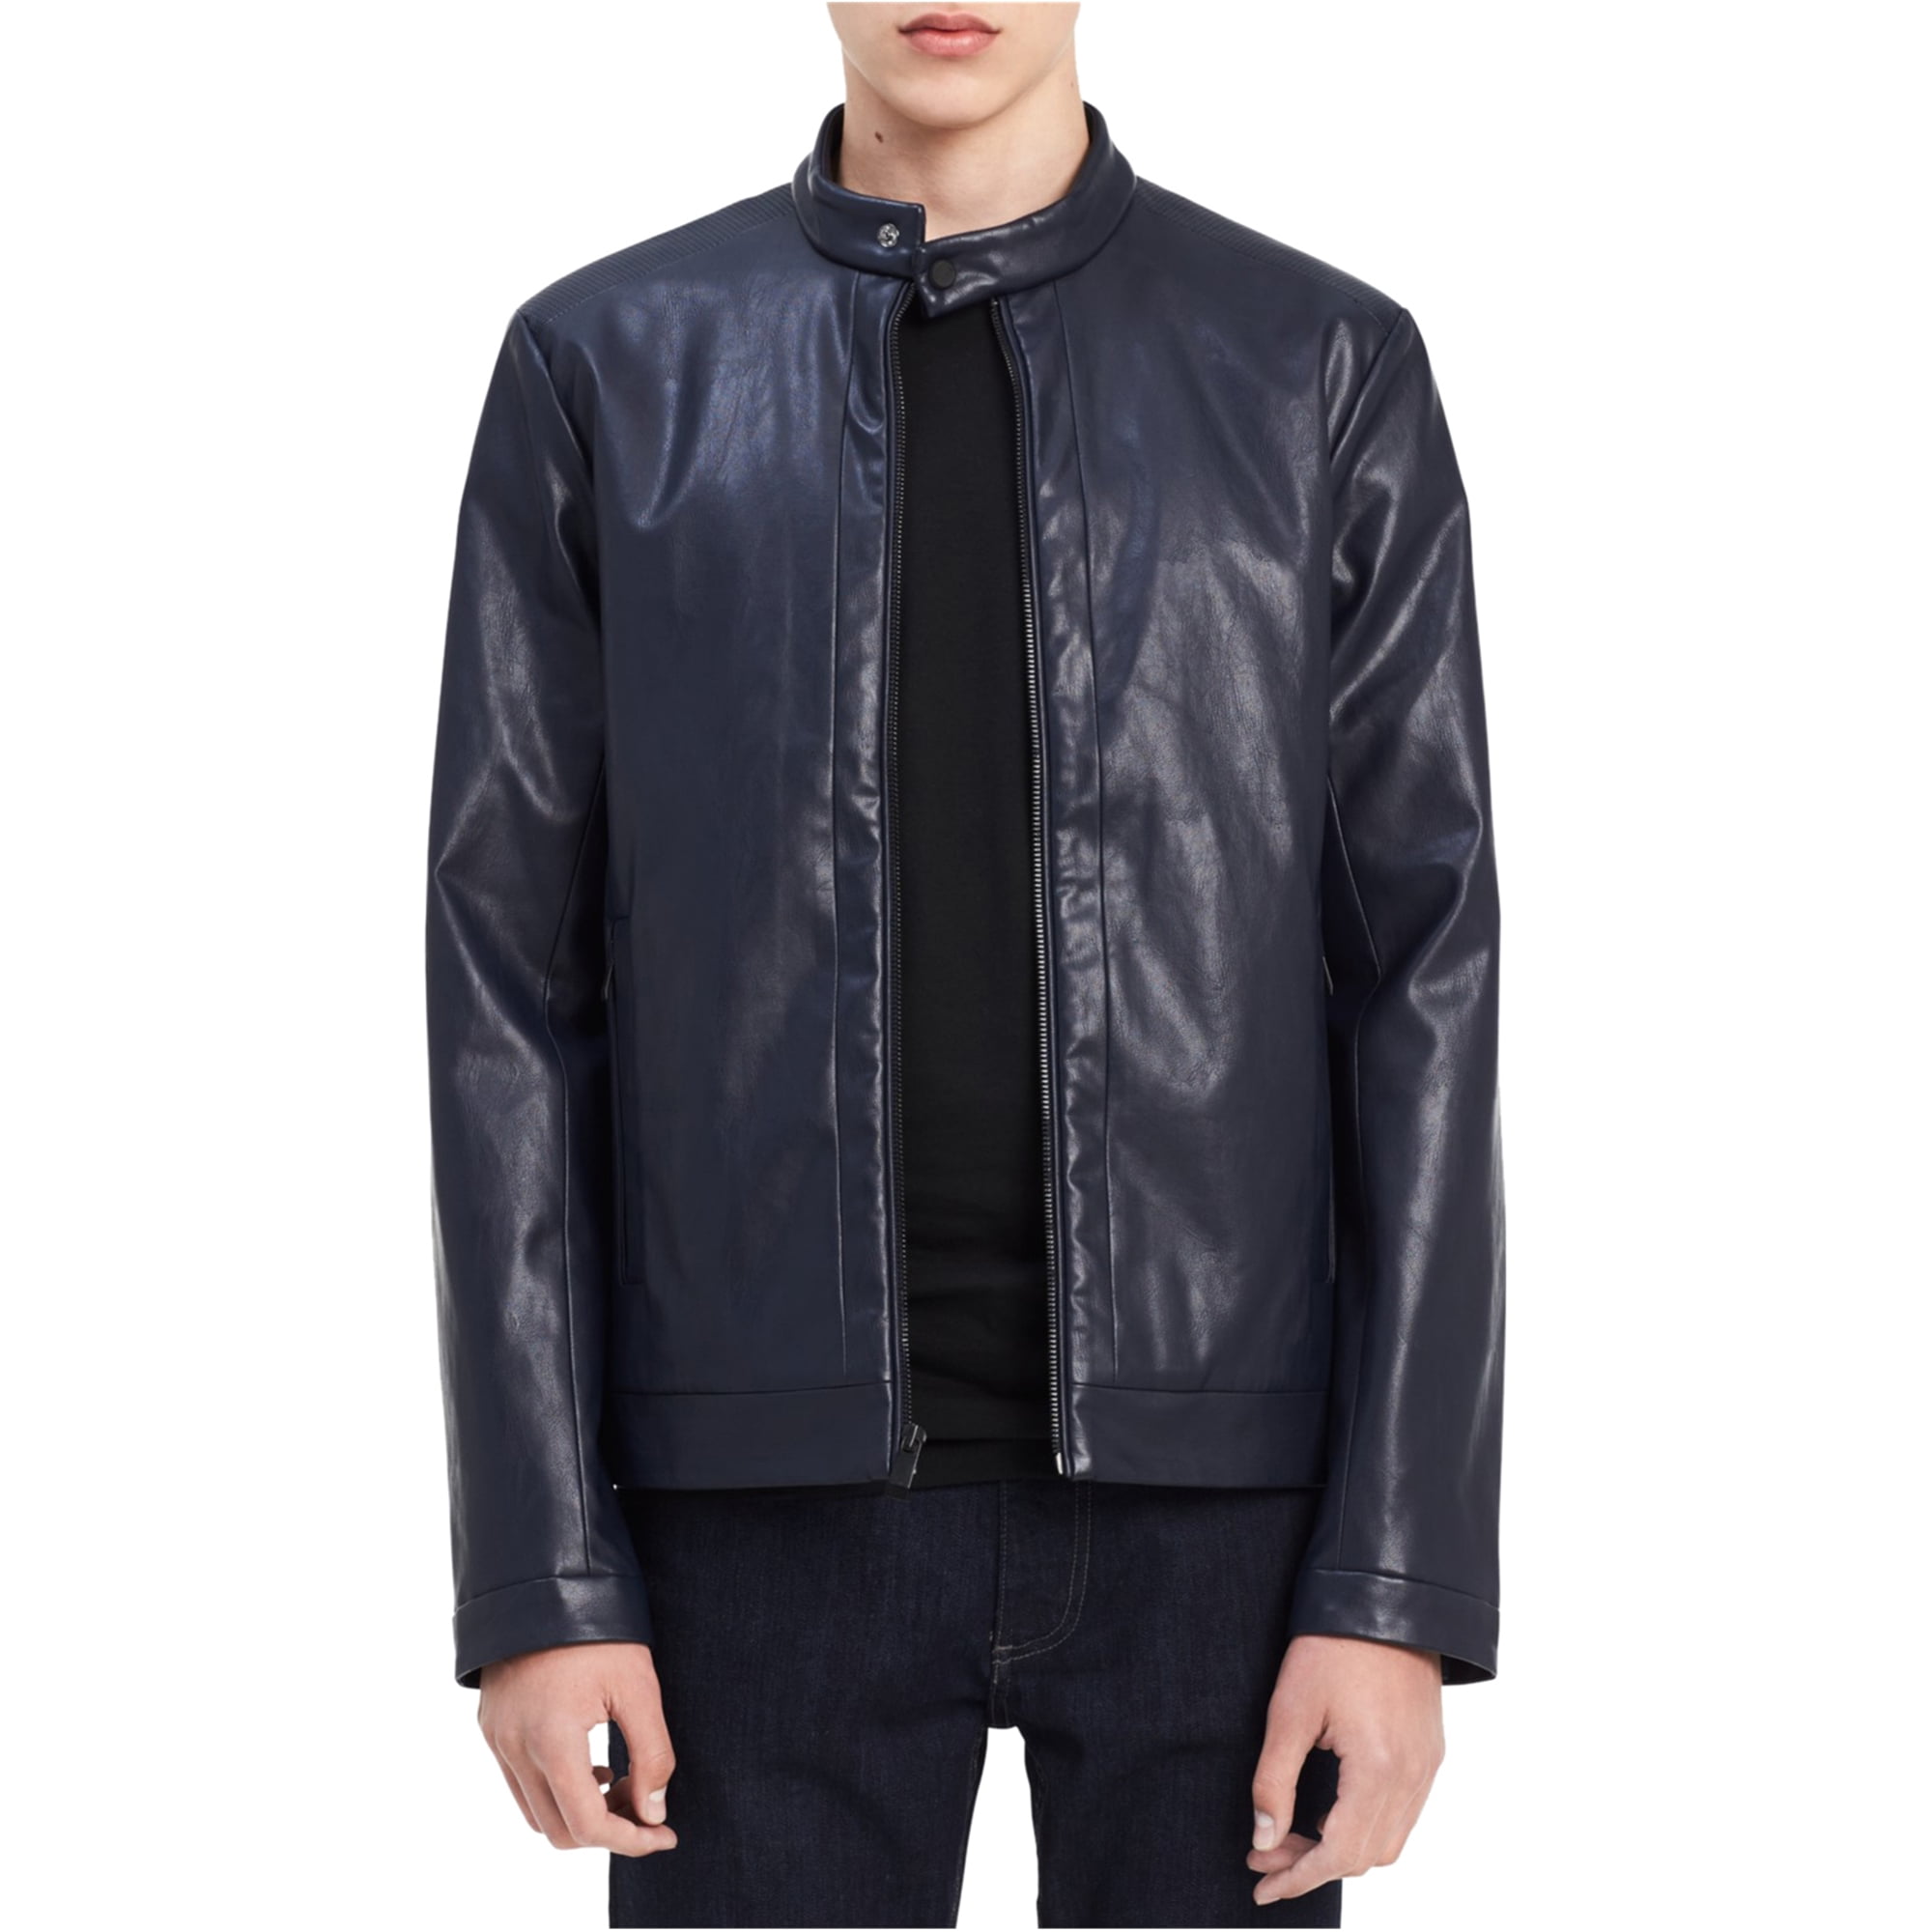 Calvin Klein Mens Moto Leather Jacket, Blue, Medium - Walmart.com ...